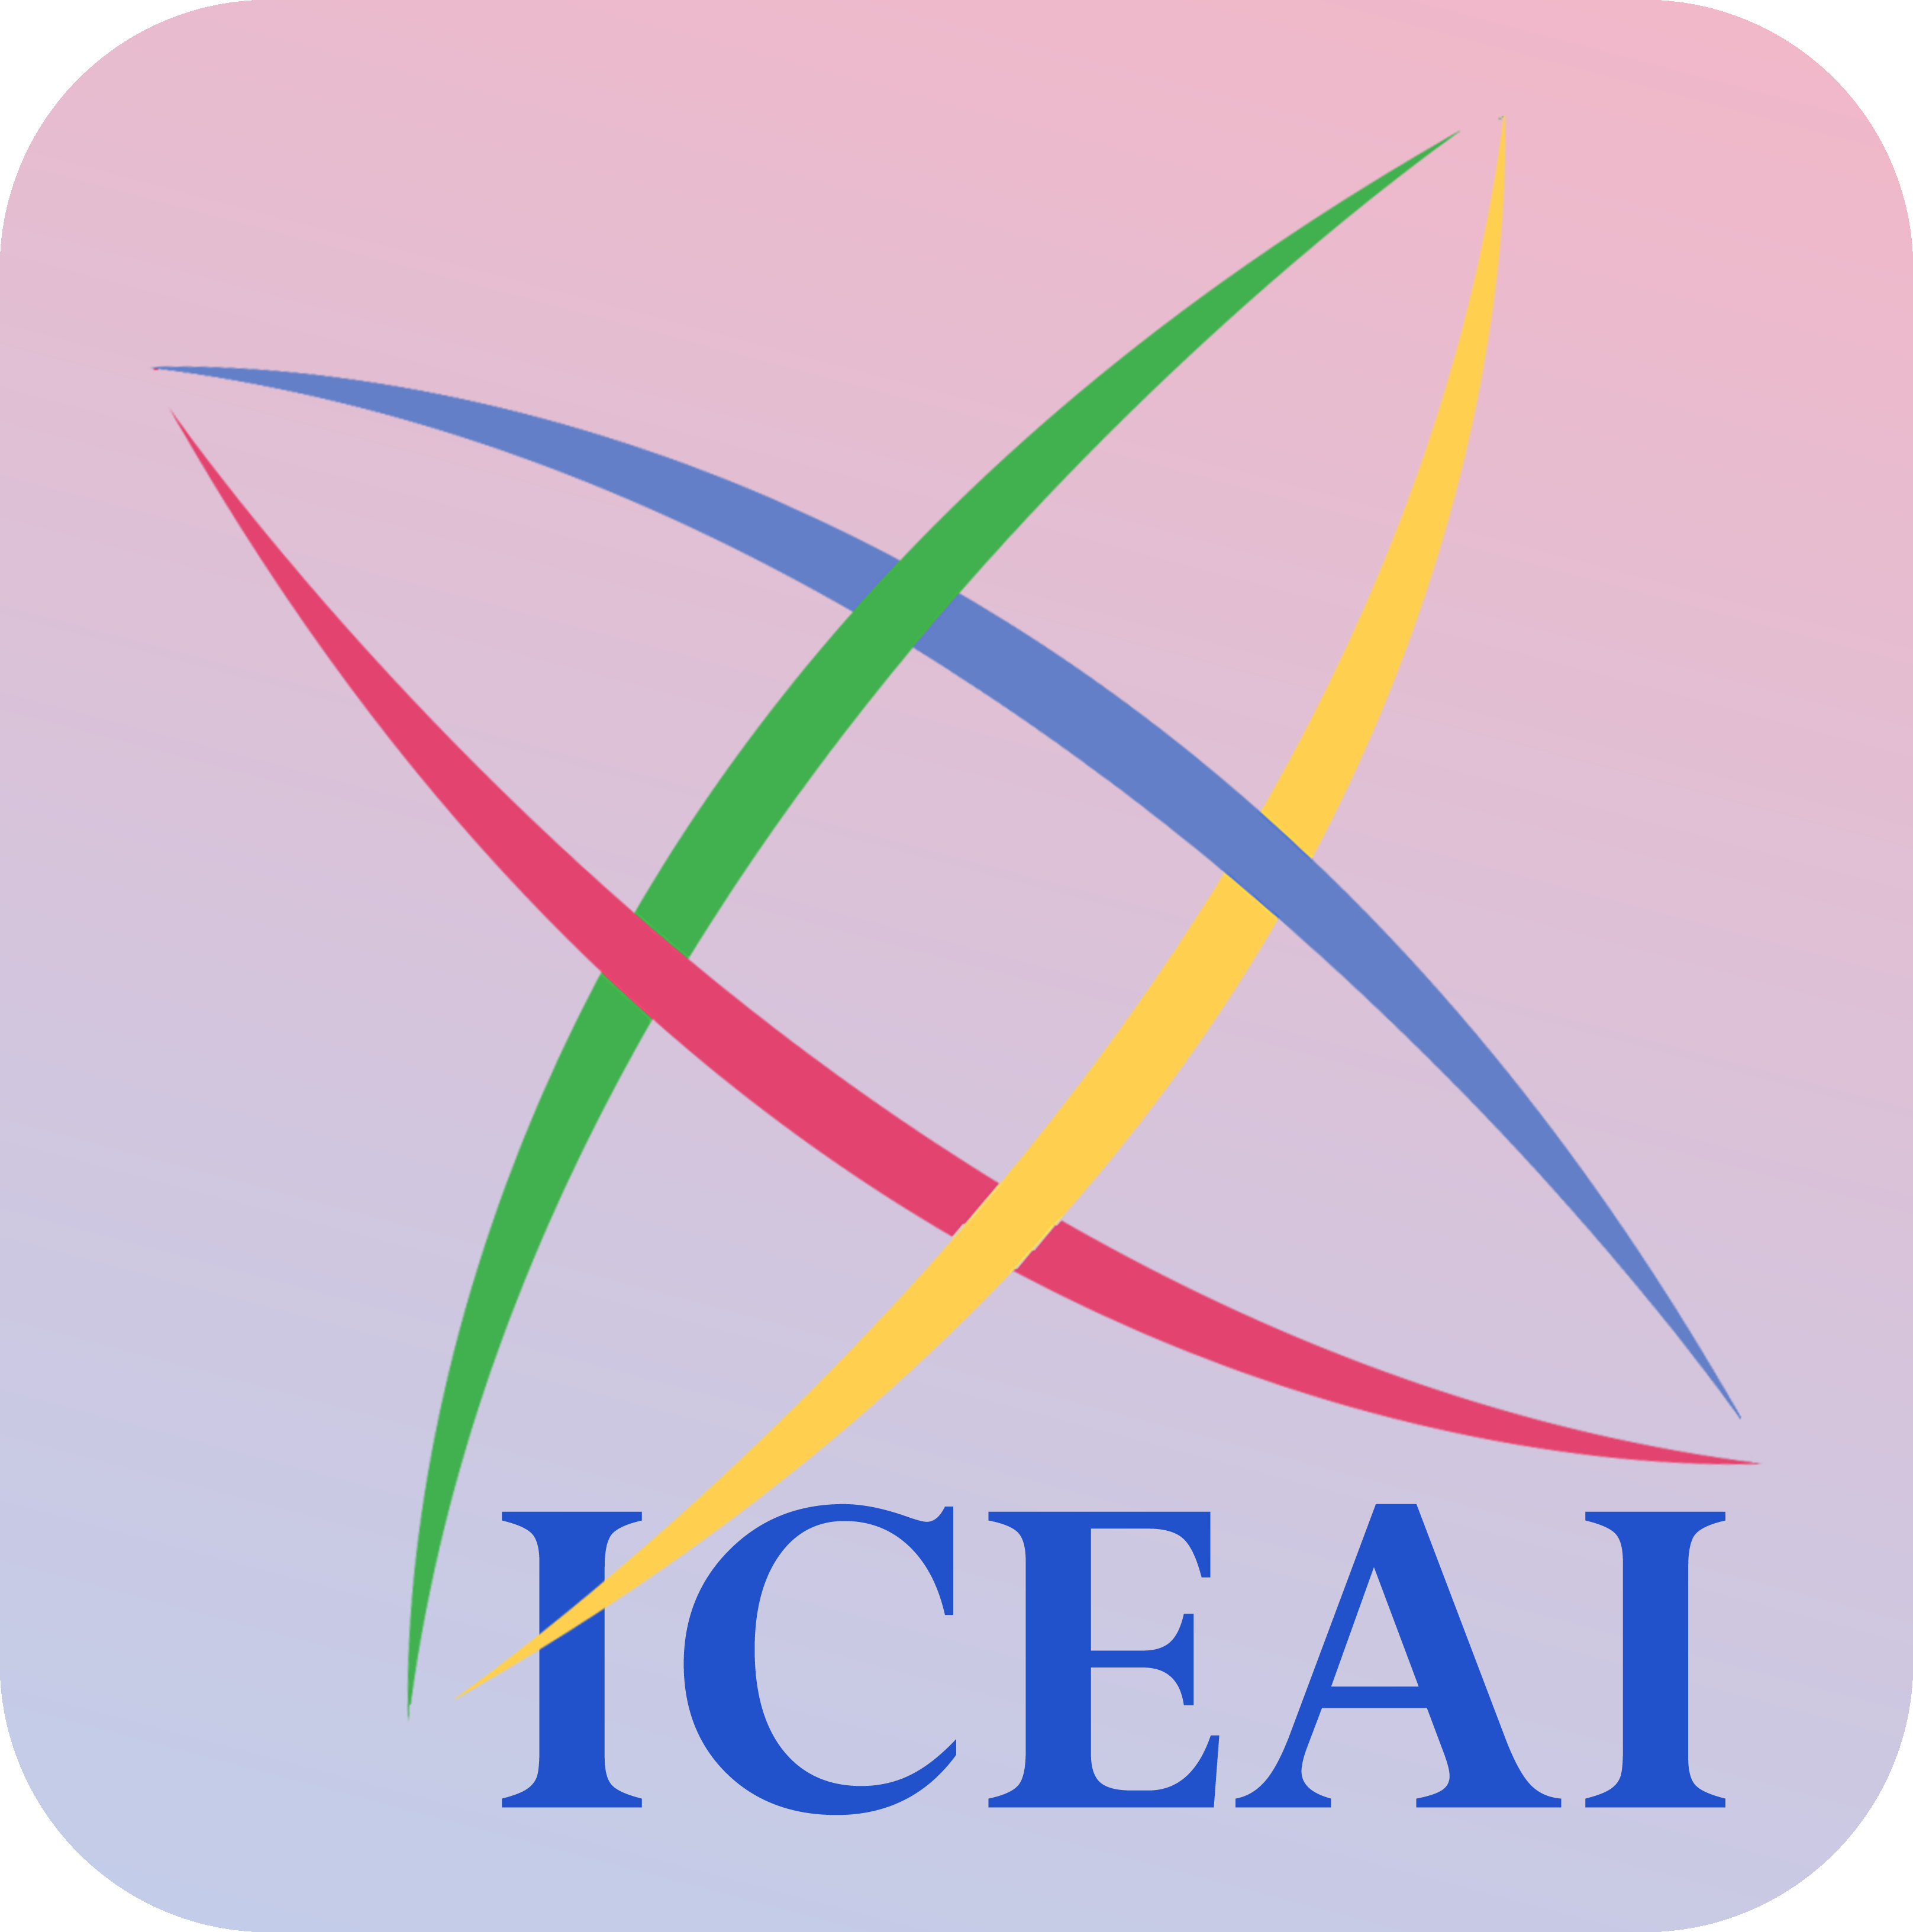 ICEAI logo